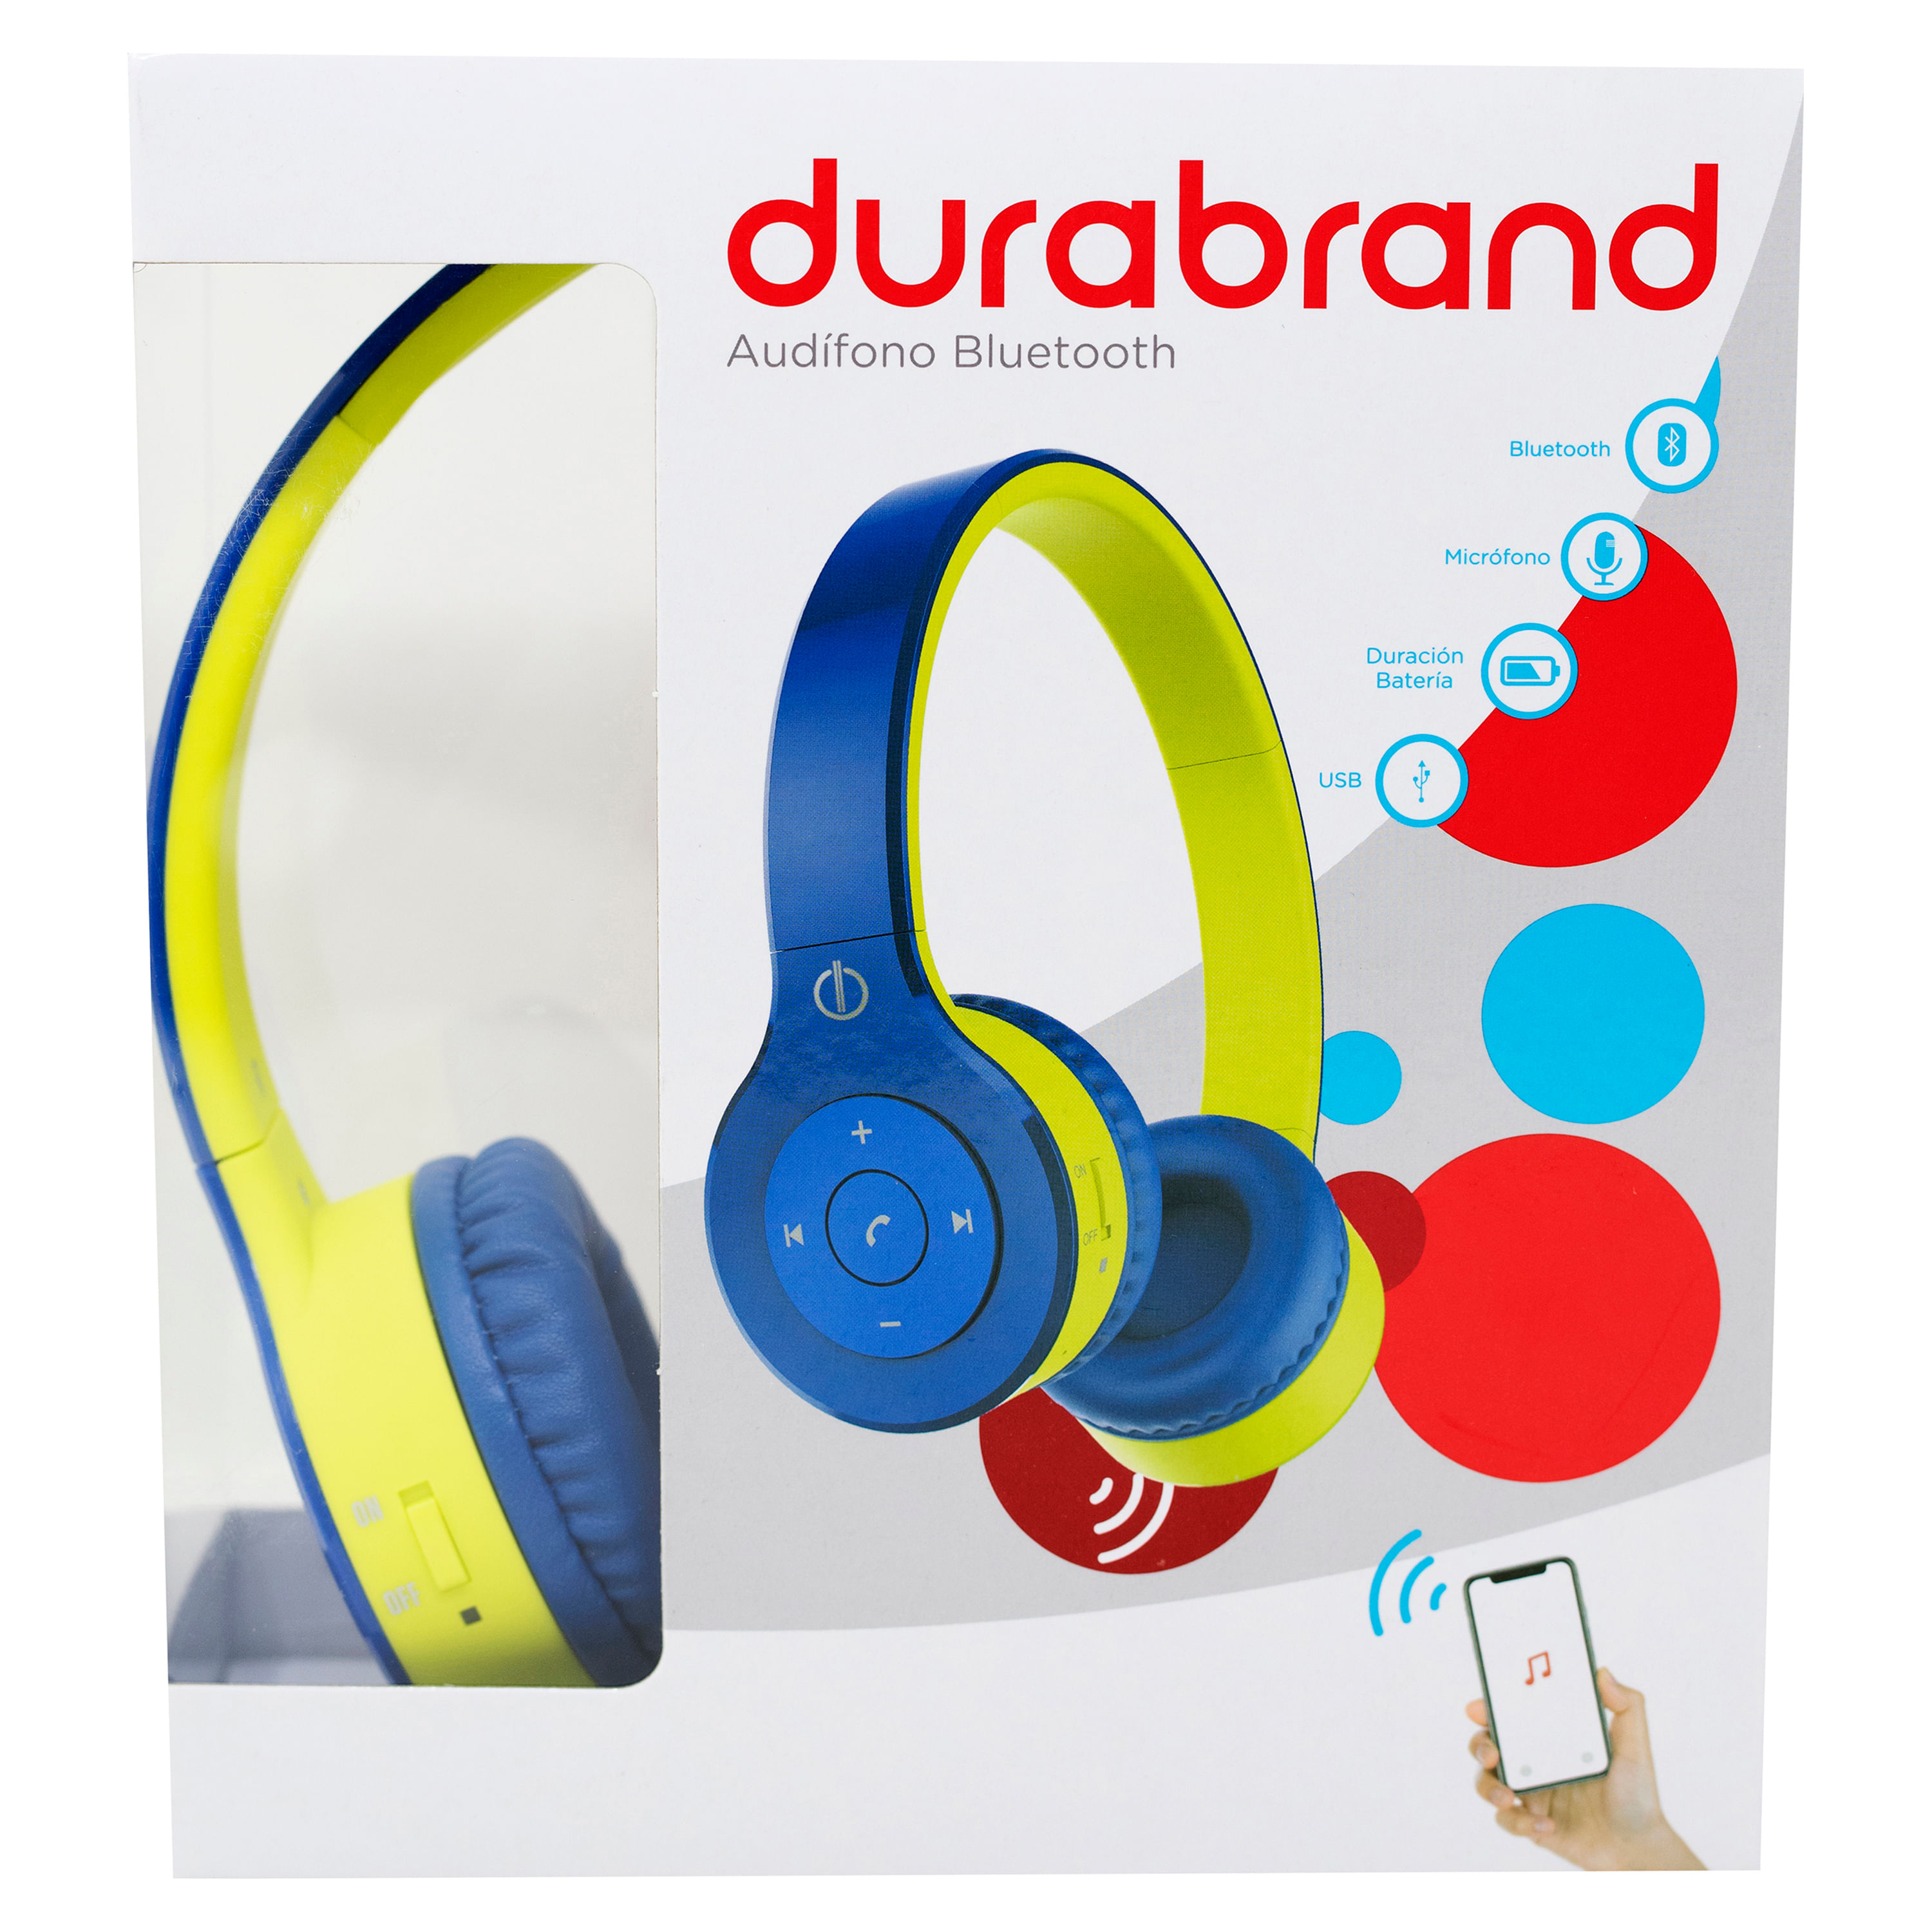 Audifonos-Durabrand-Bluetooth-1-5360